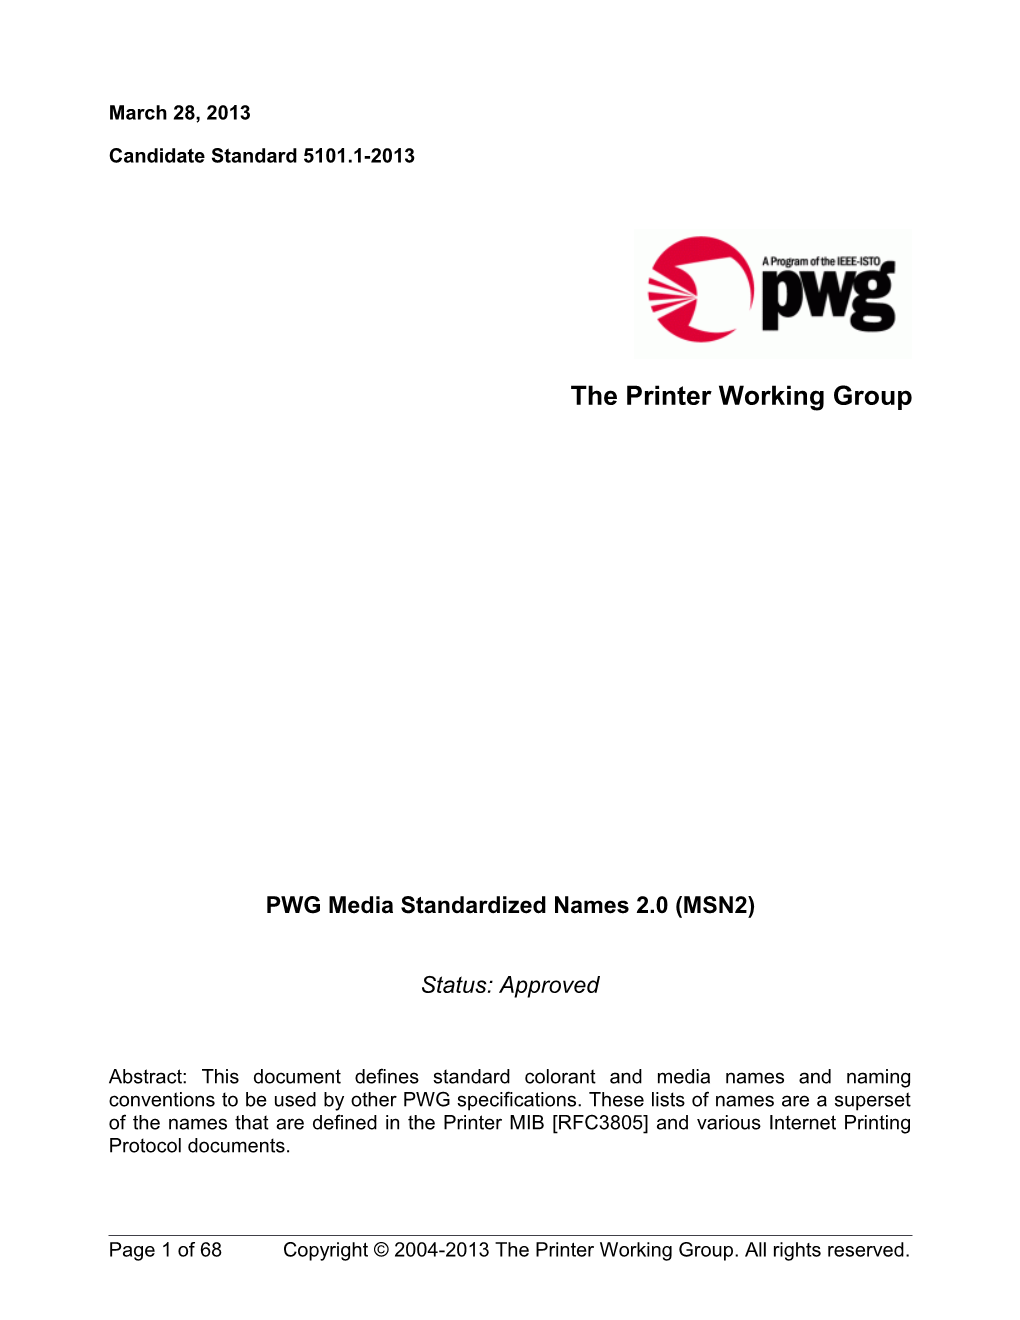 PWG 5101.1-2012 Media Names 2.0